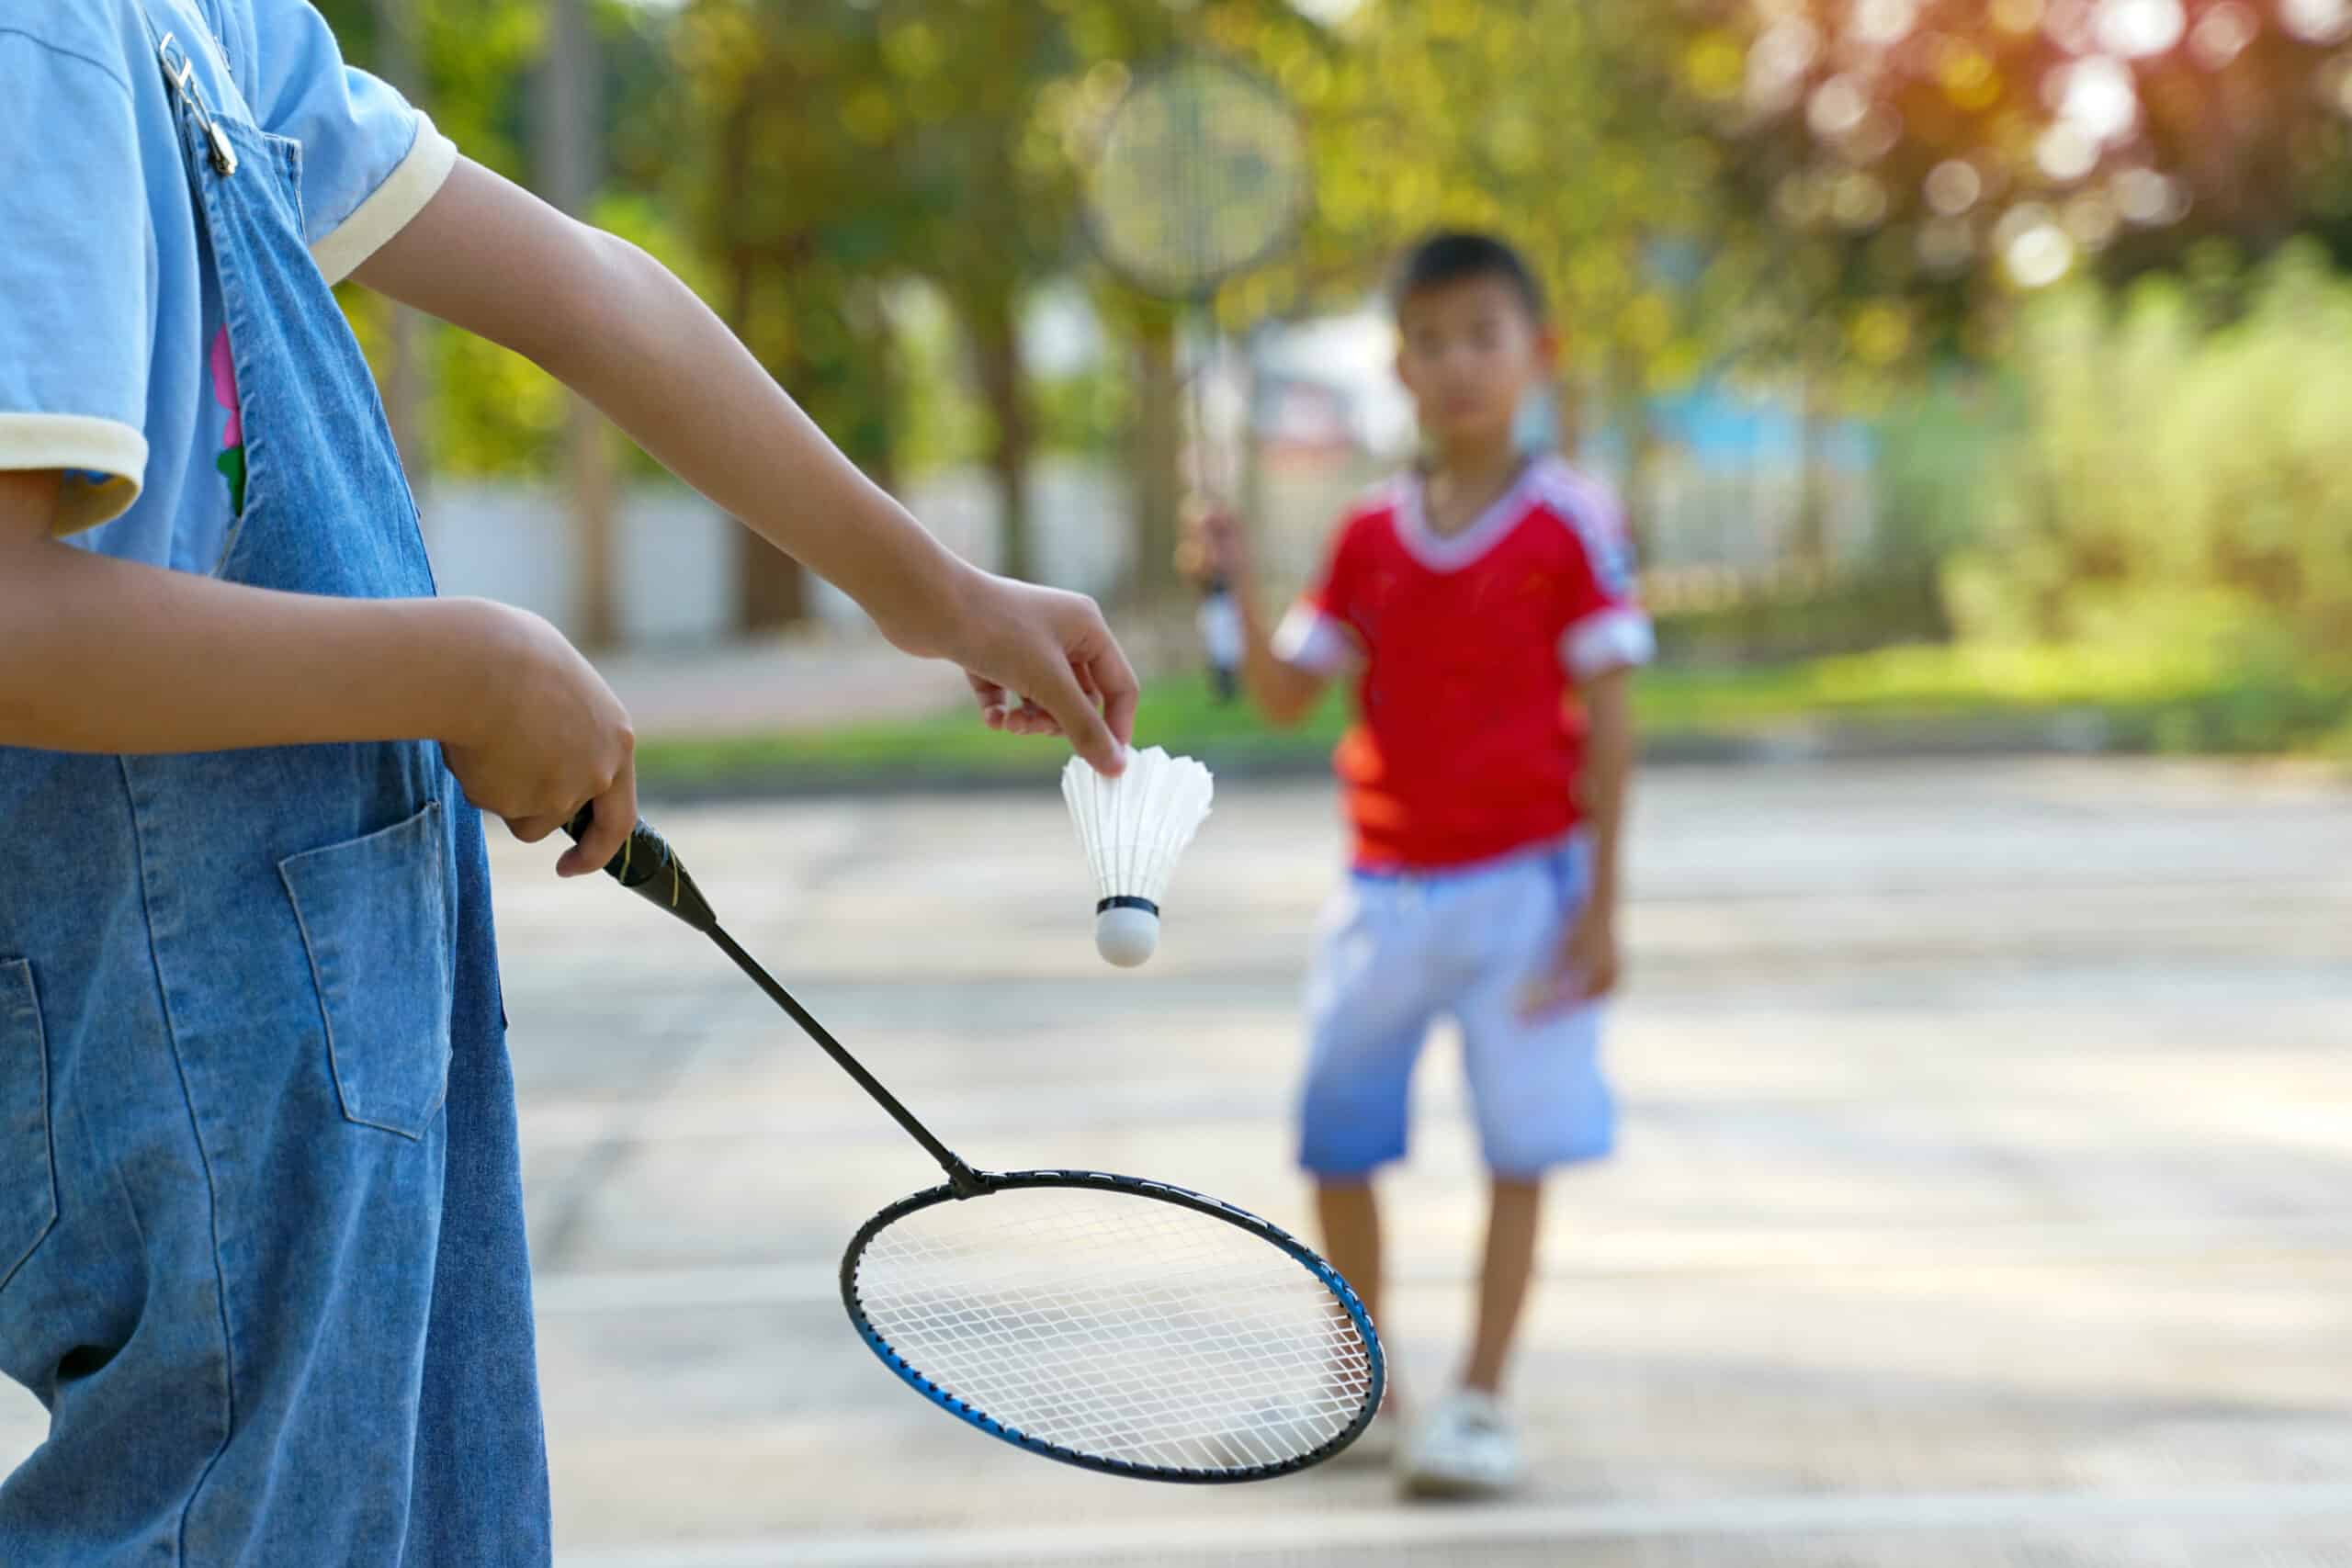 www.appr.com : How do you set up an outdoor badminton net?